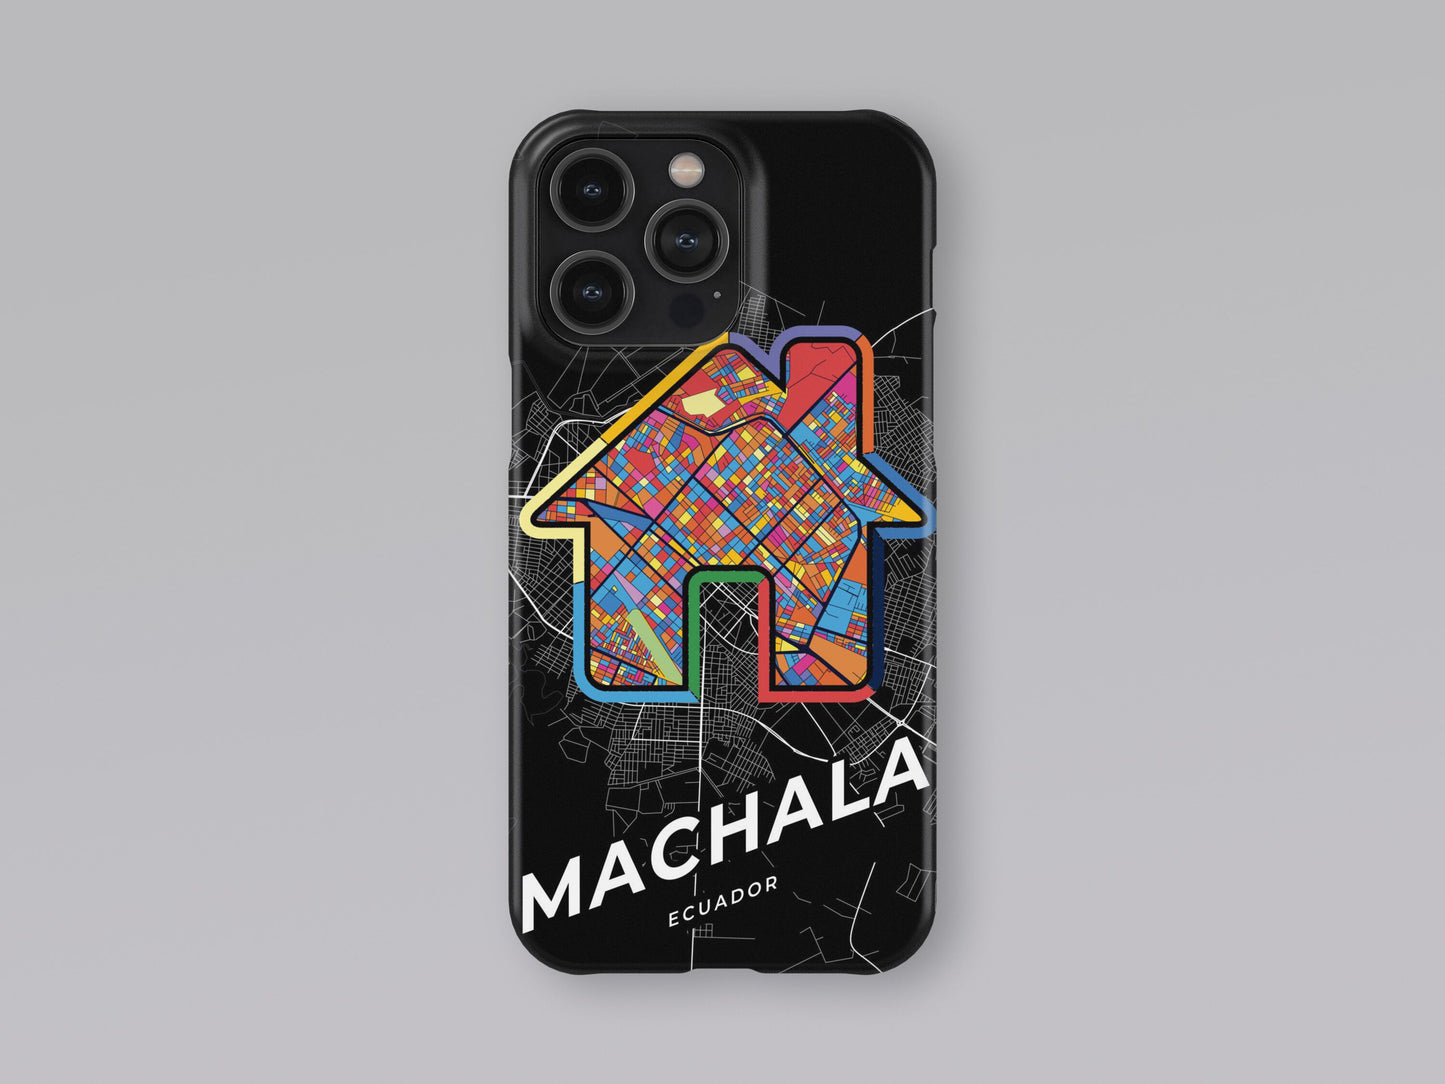 Machala Ecuador slim phone case with colorful icon. Birthday, wedding or housewarming gift. Couple match cases. 3